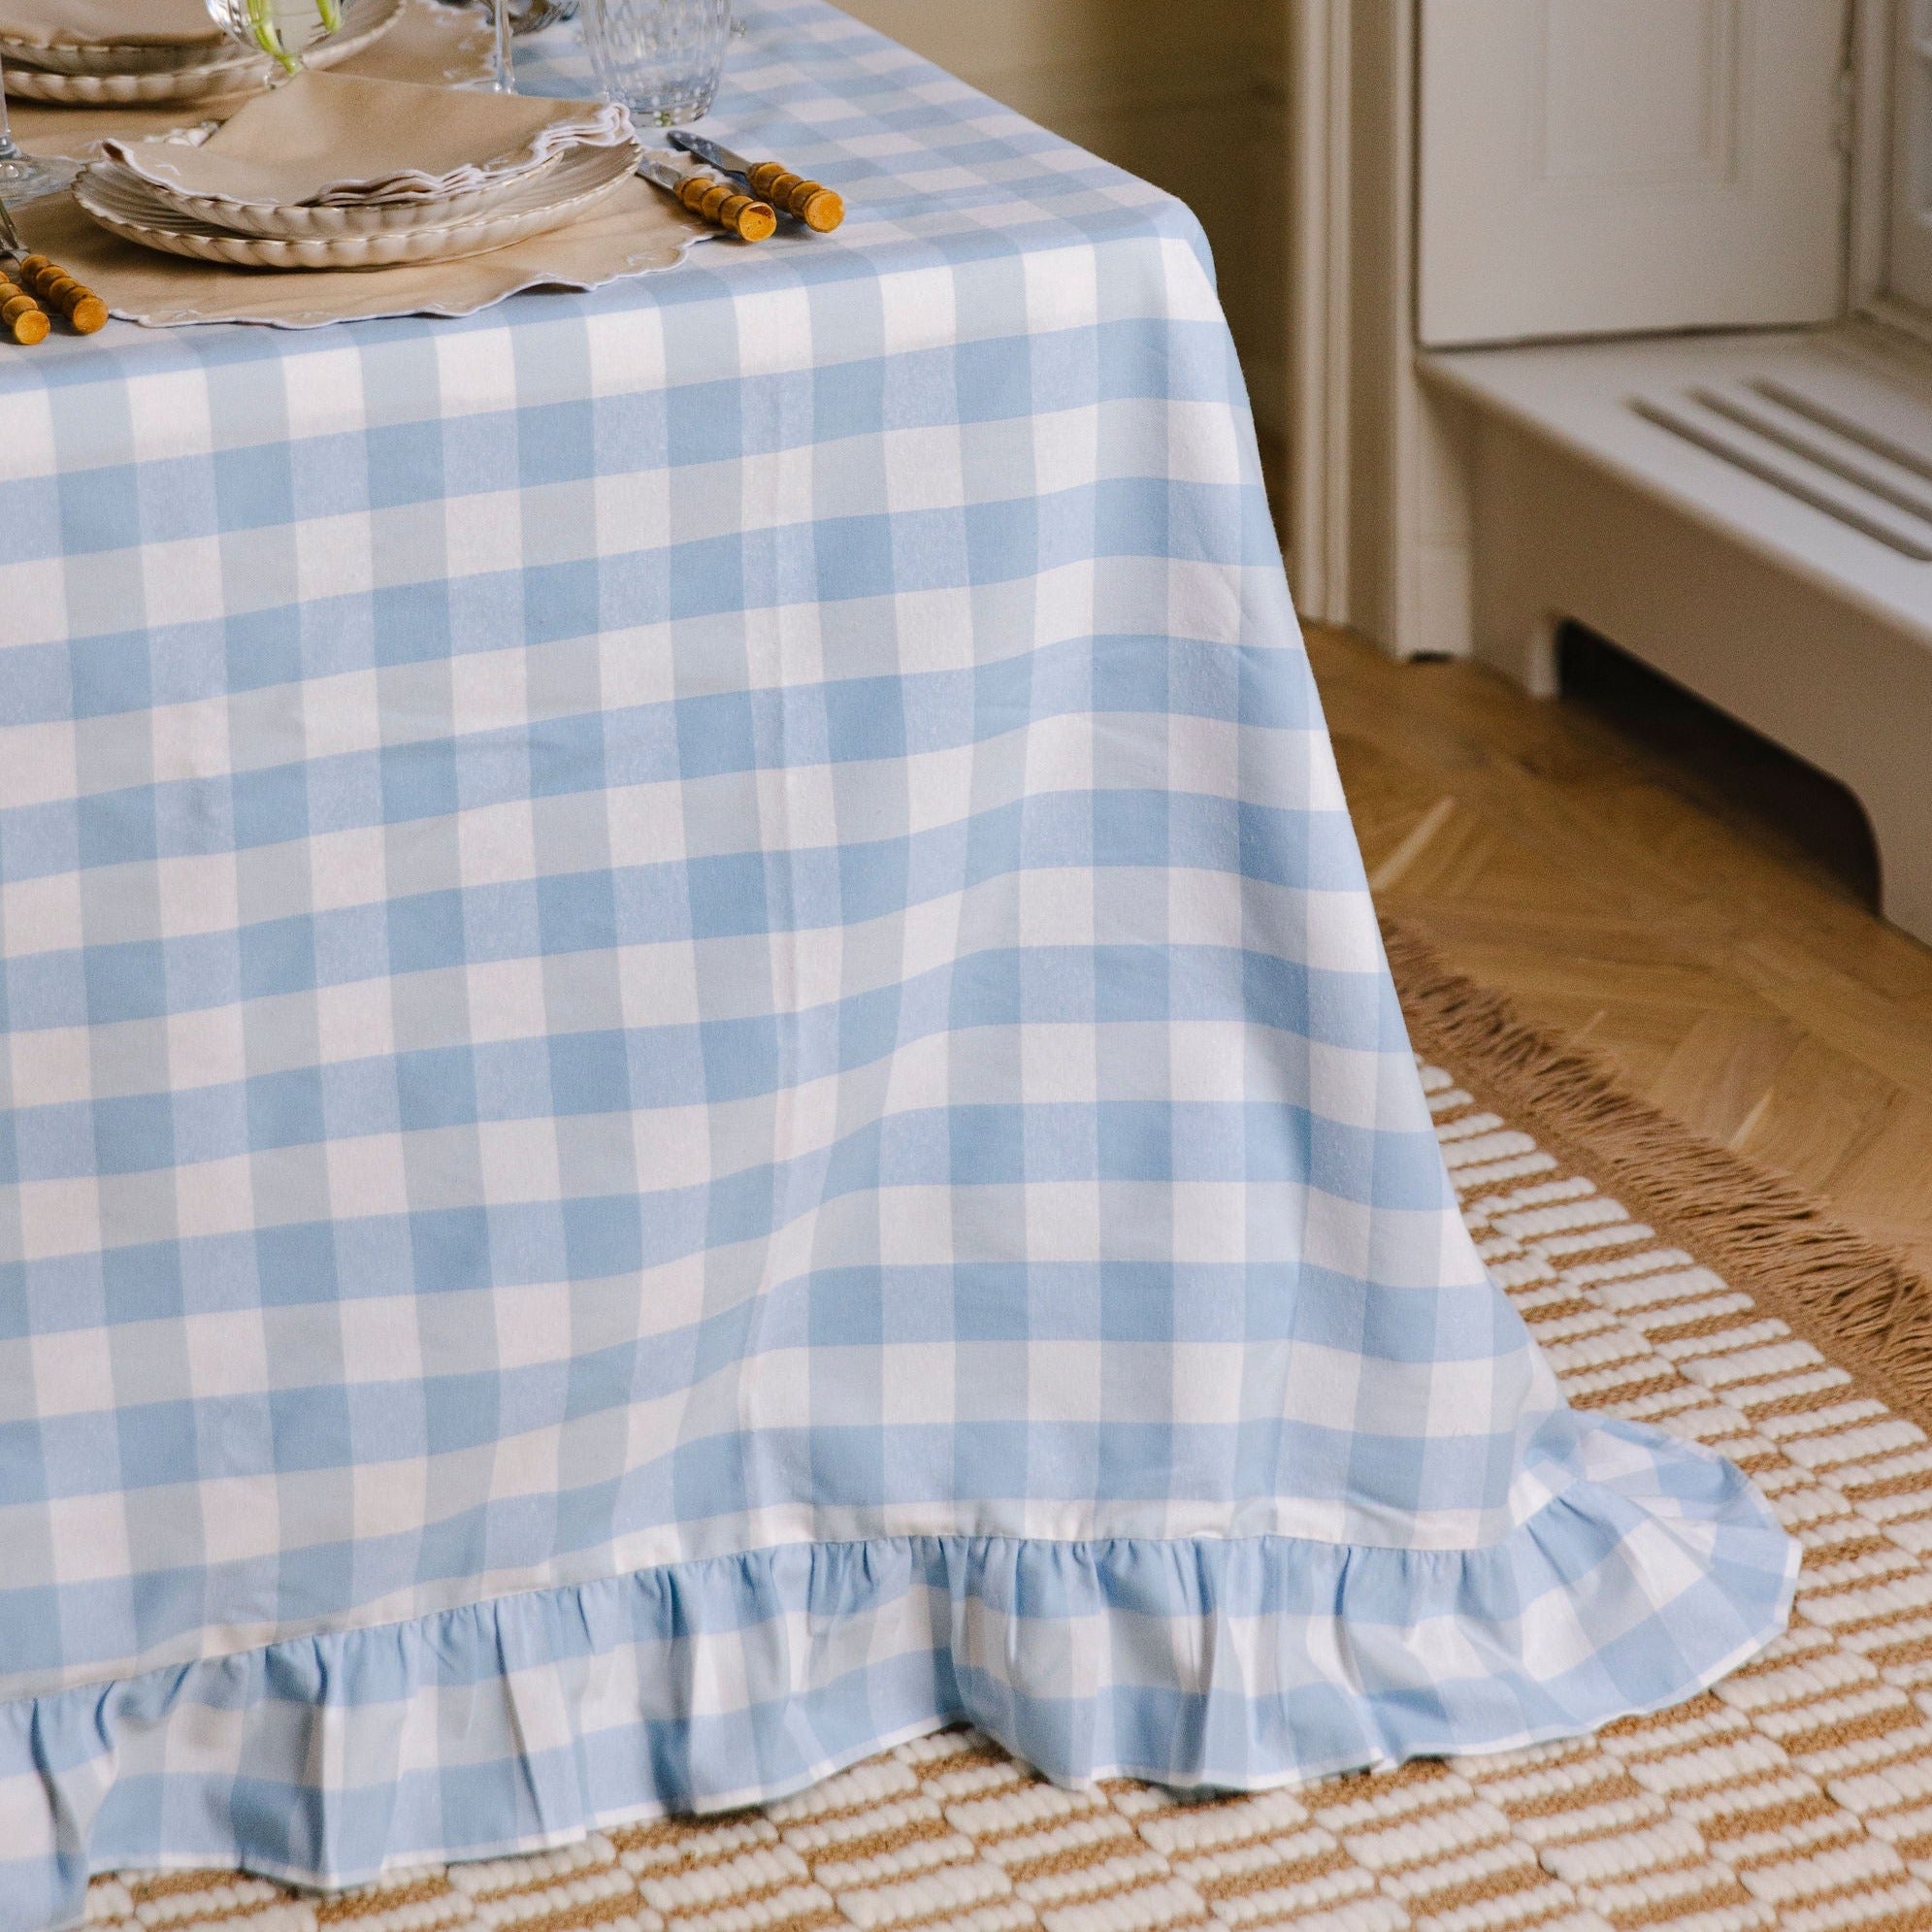 Rent: Soft Blue Gingham Tablecloth